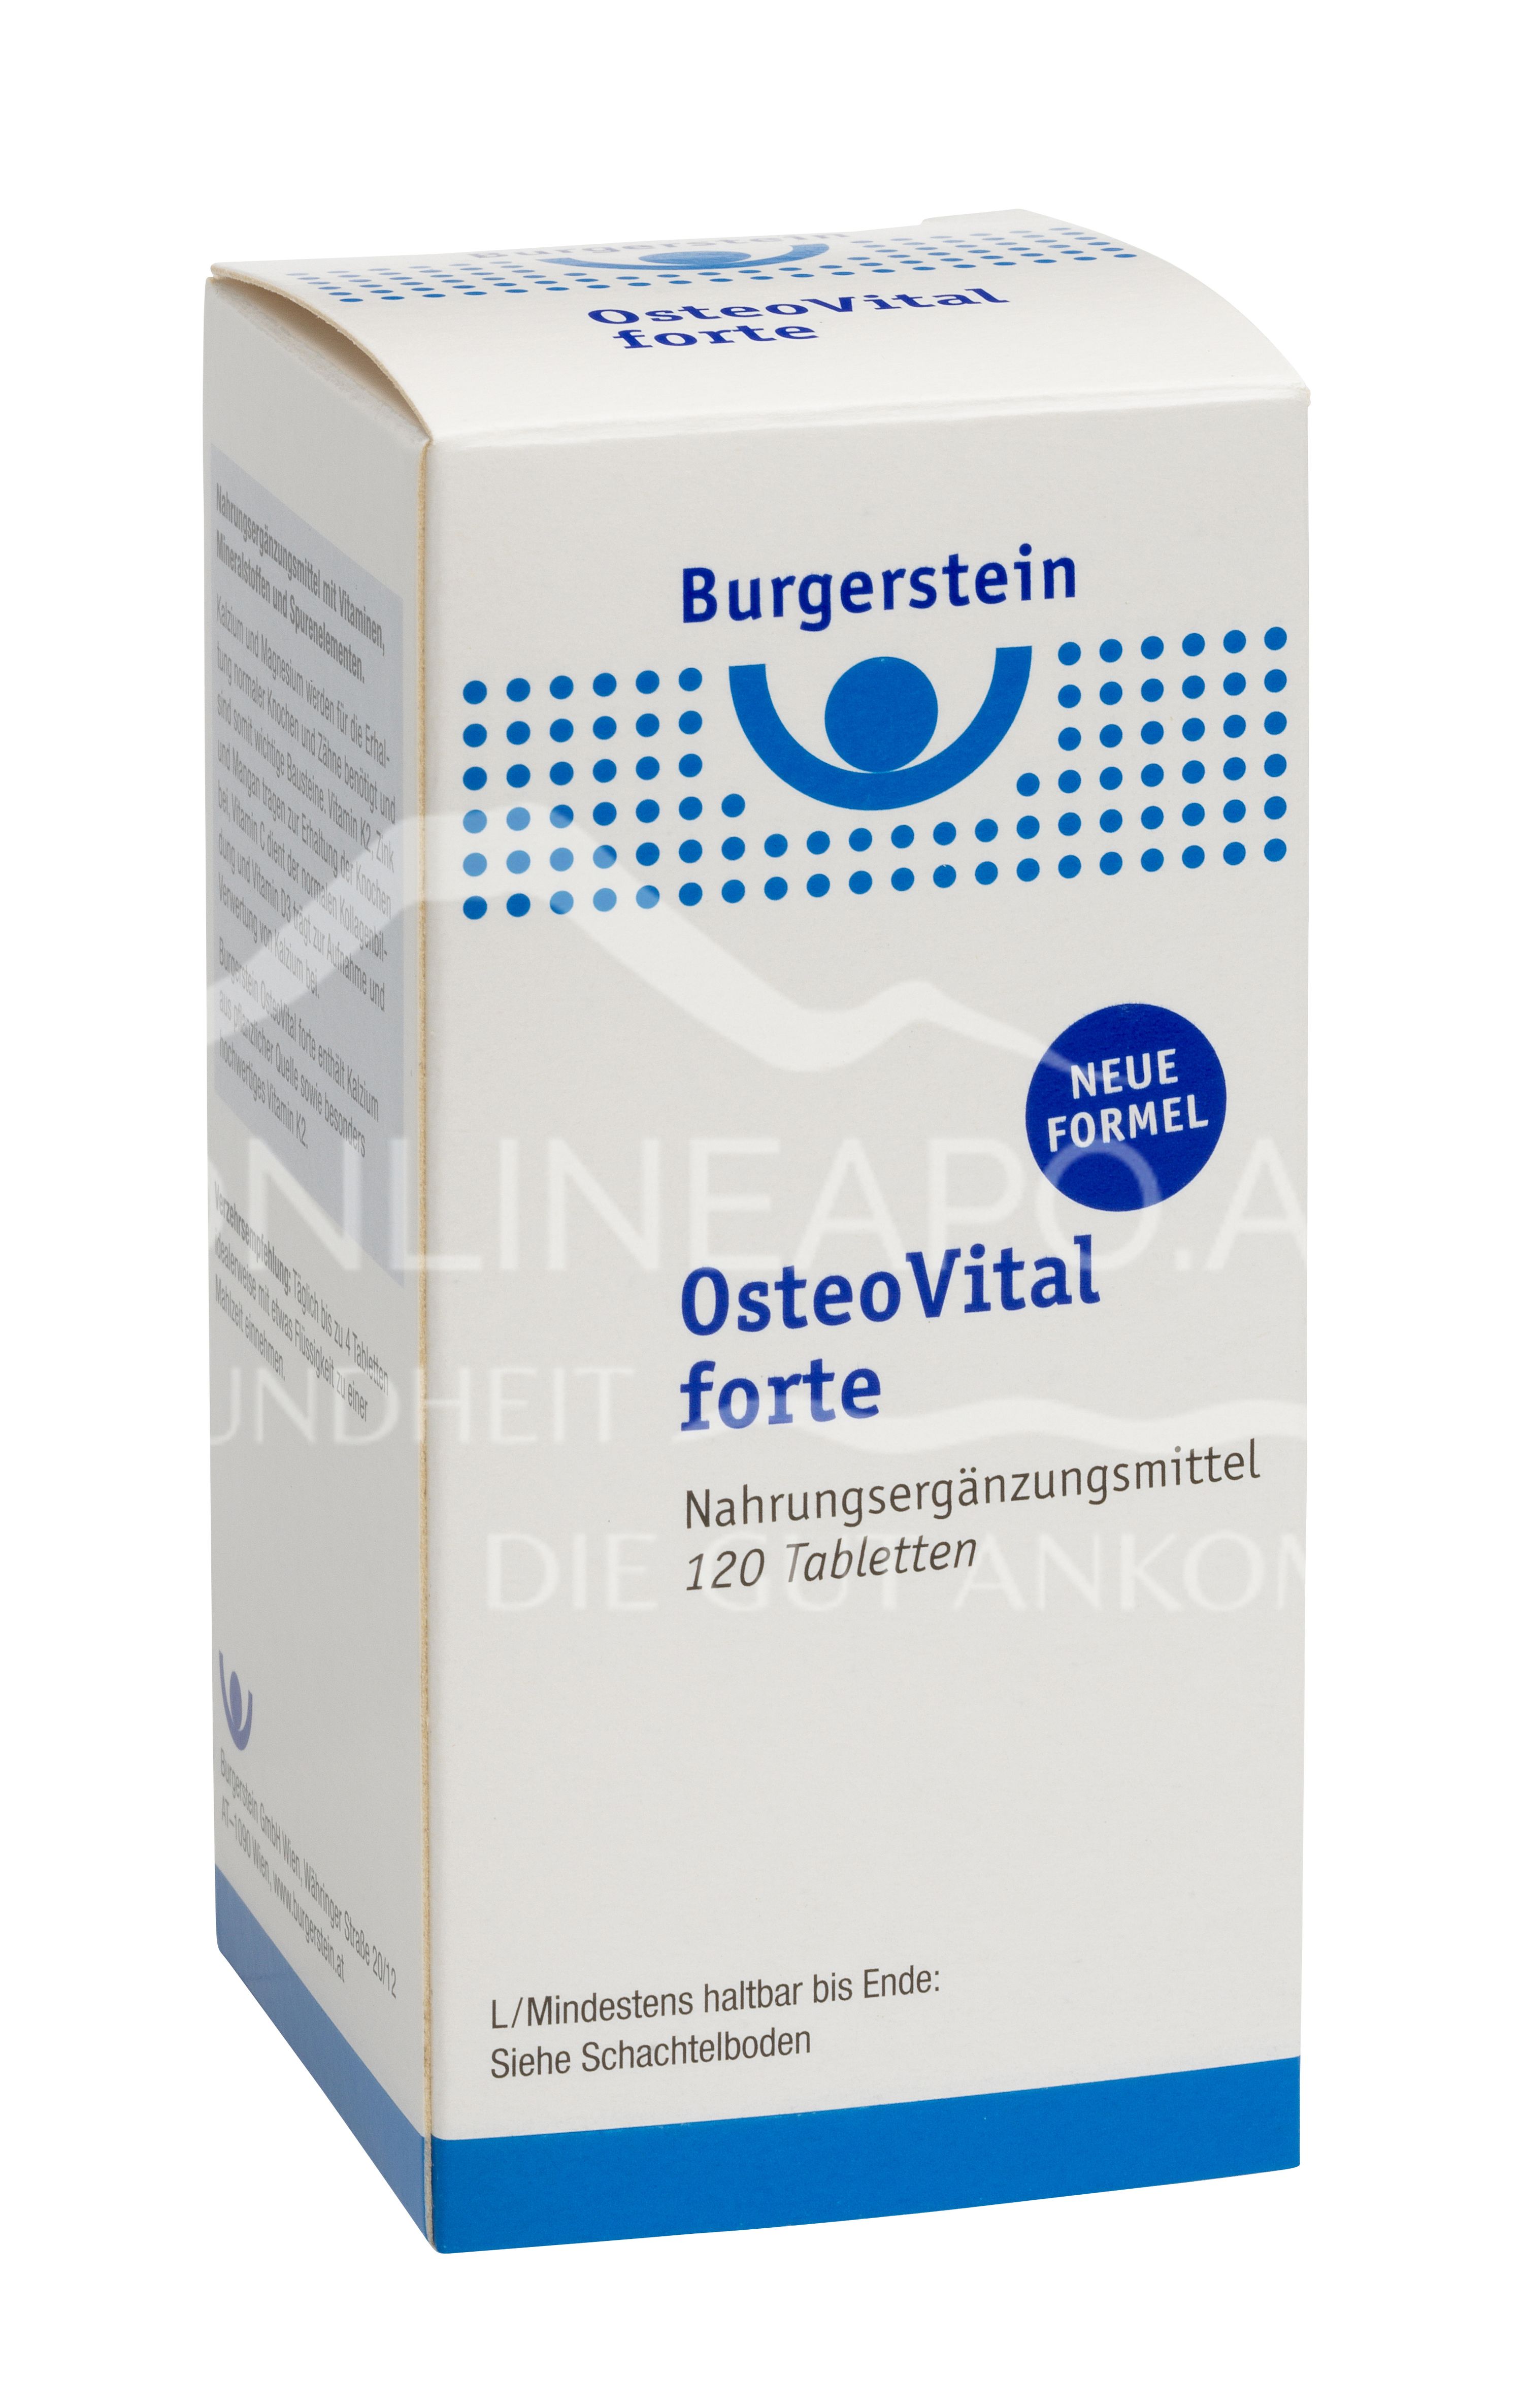 Burgerstein OsteoVital forte Tabletten